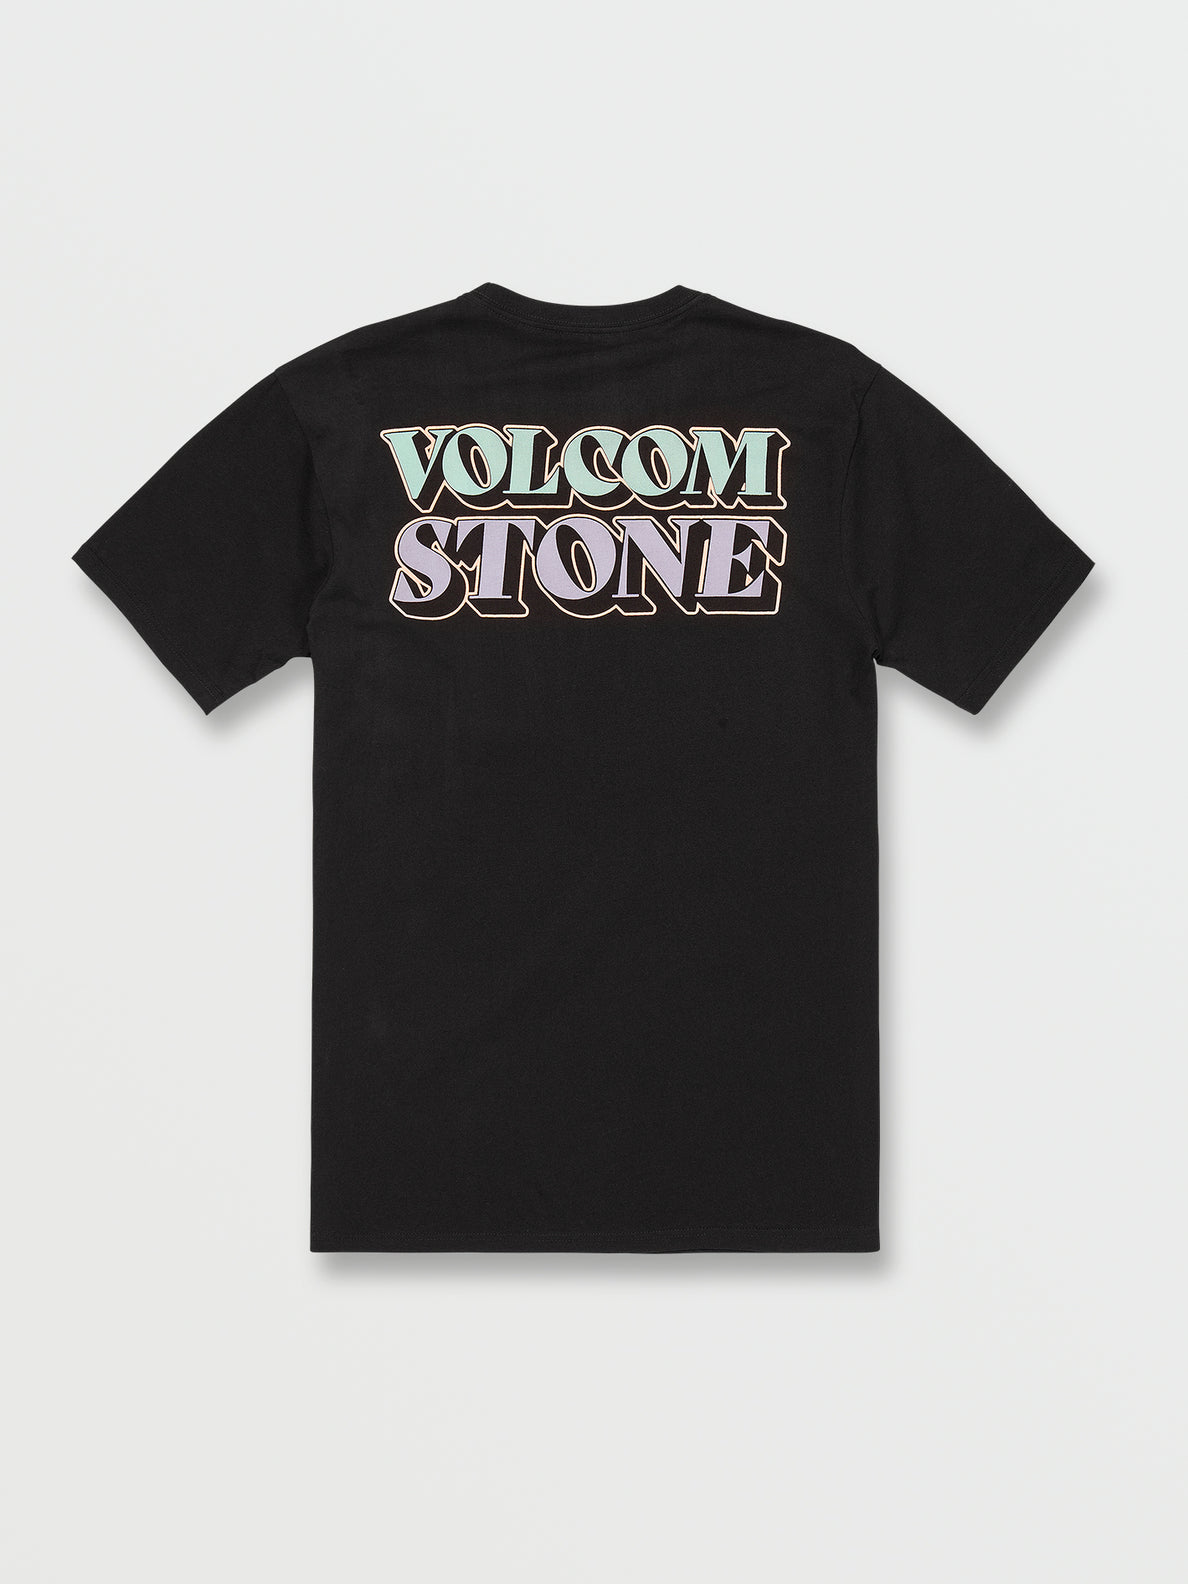 Volcom Stript SS T-Shirt - Schwarz | Meistverkaufte Produkte | Neue Produkte | Neueste Produkte | surfdevils.com